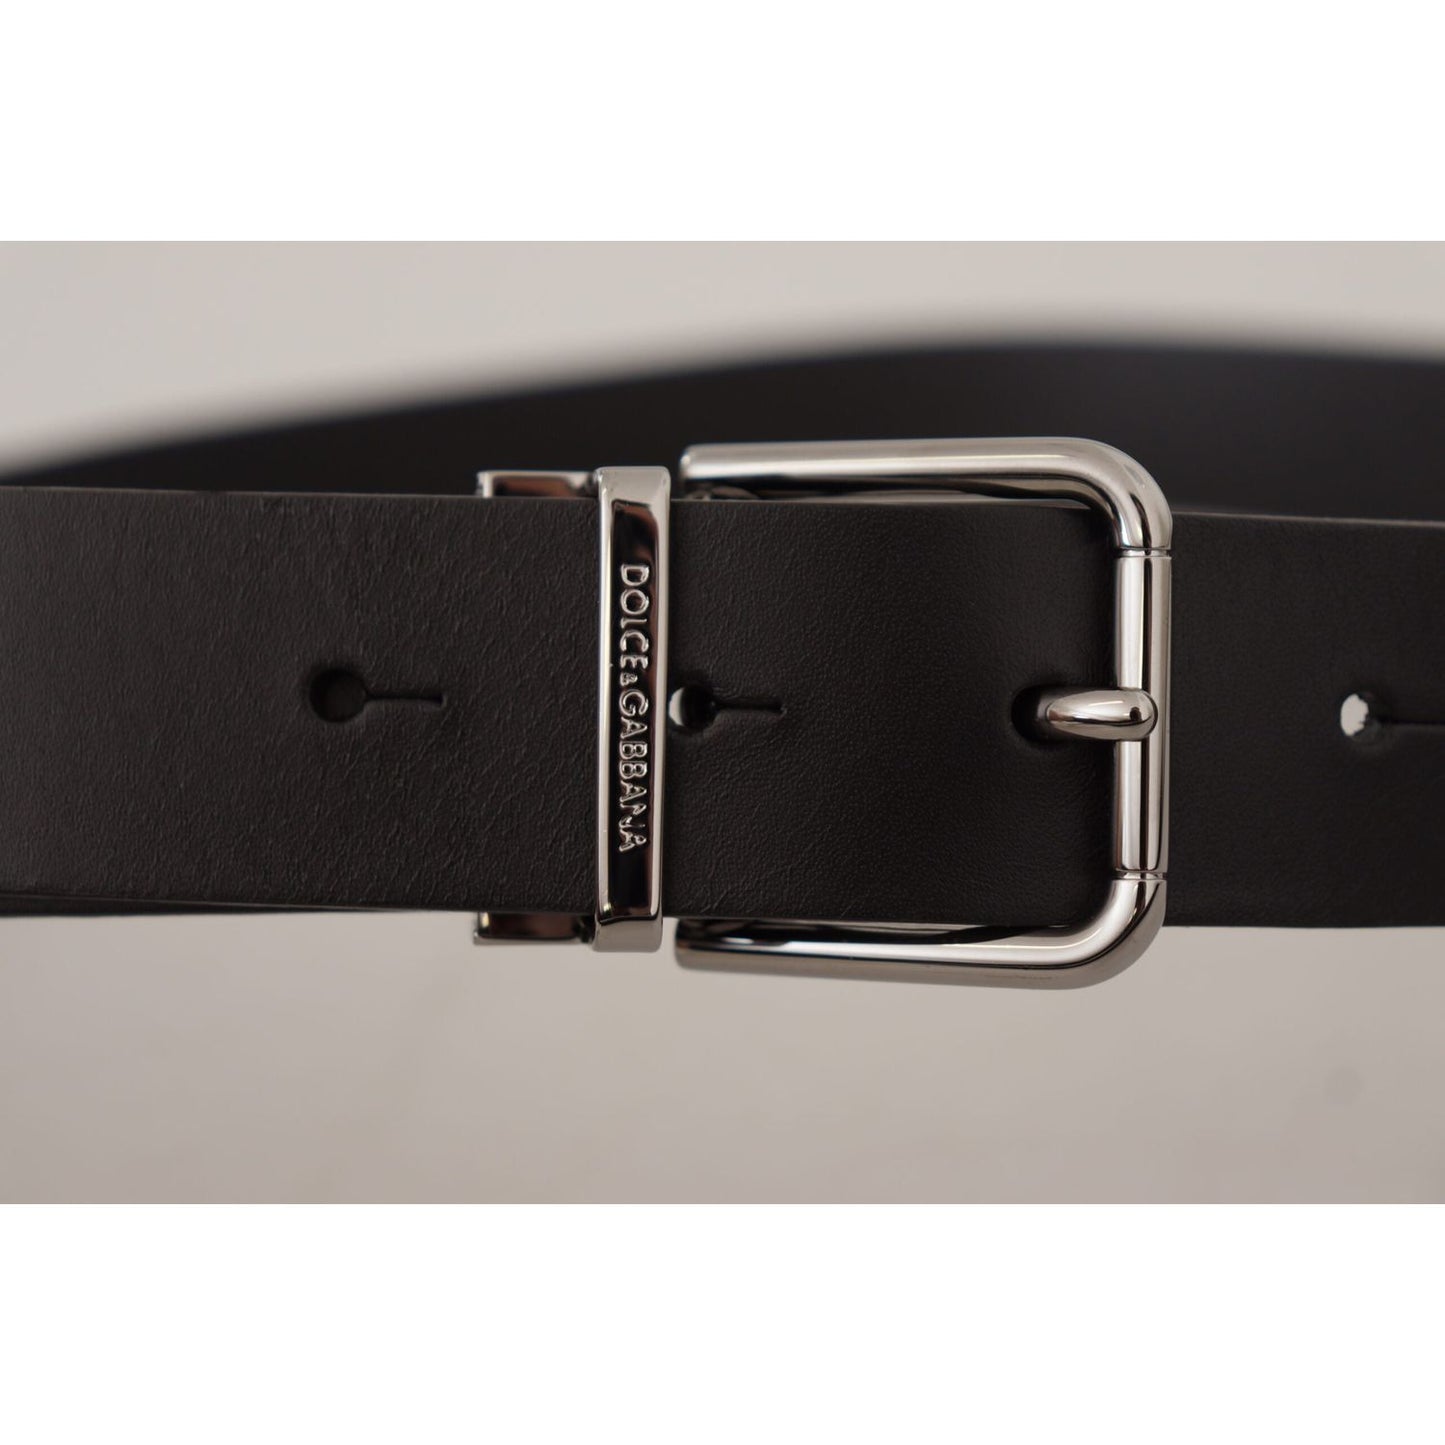 Dolce & Gabbana Elegant Black Leather Belt with Metal Buckle black-casual-calf-leather-logo-metal-buckle-belt